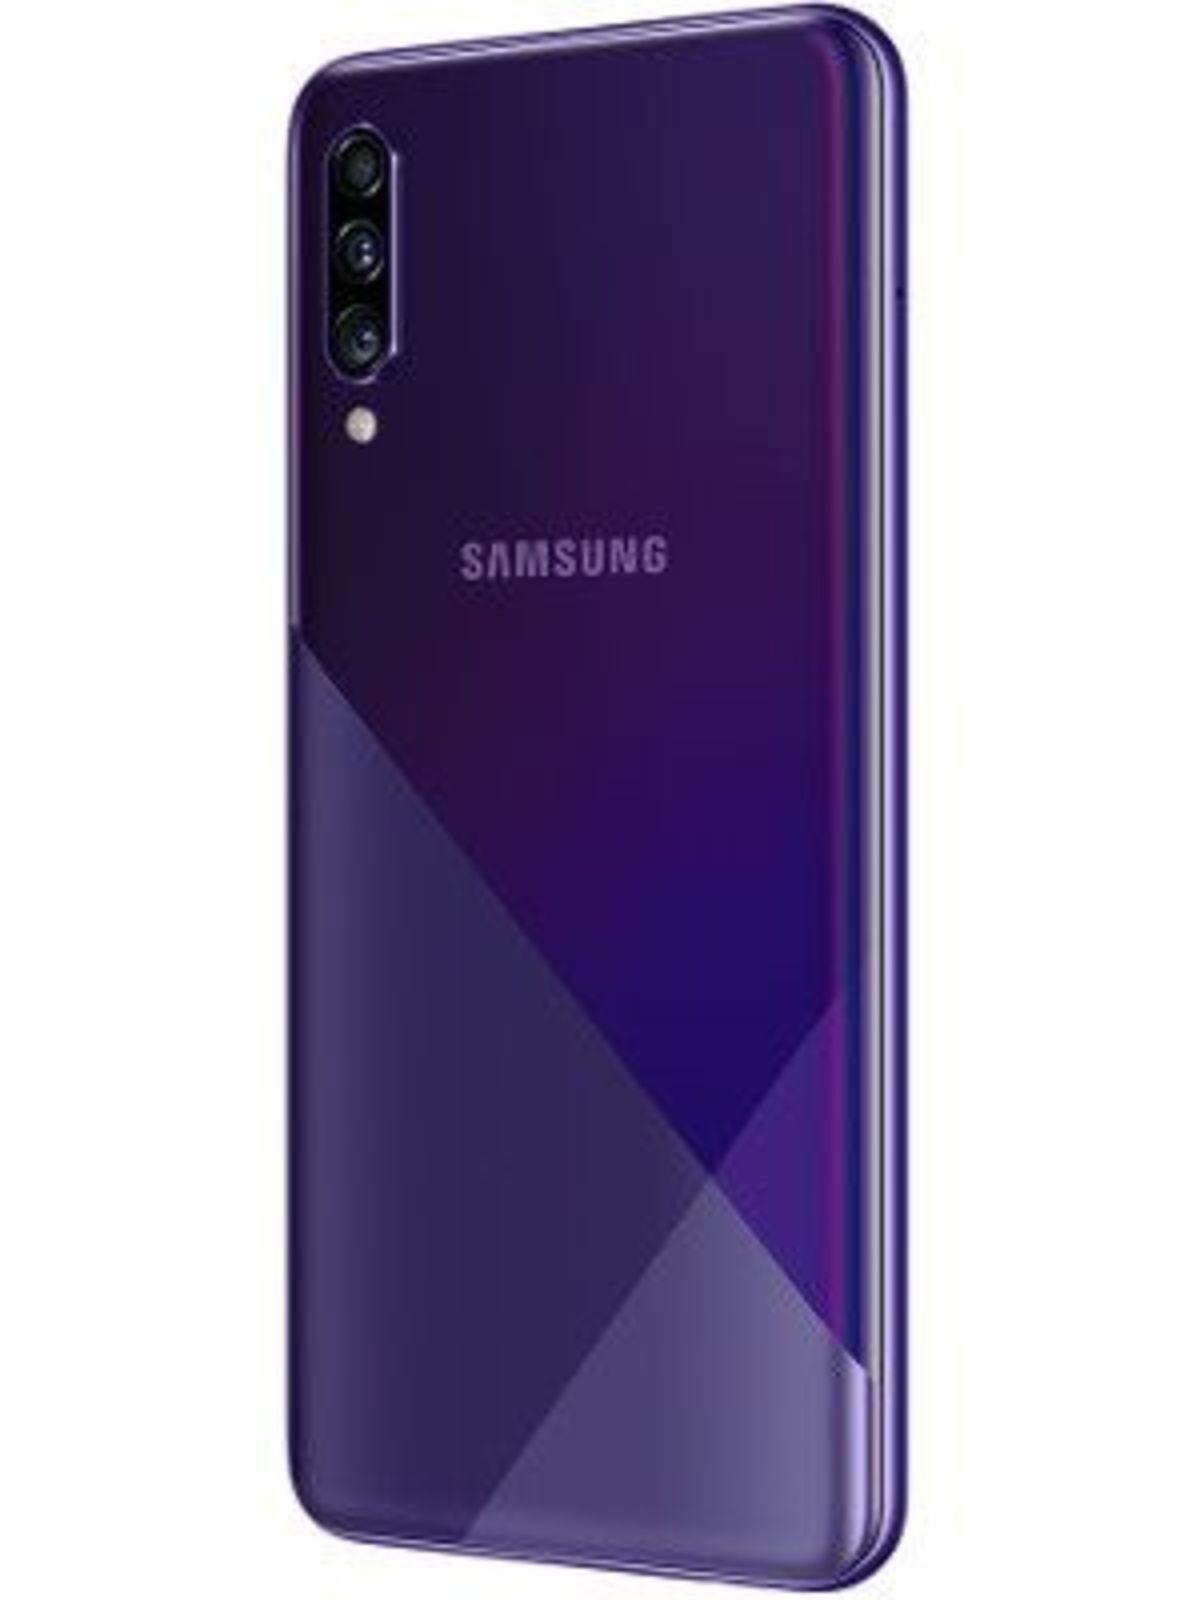 Samsung A30s 3 32gb